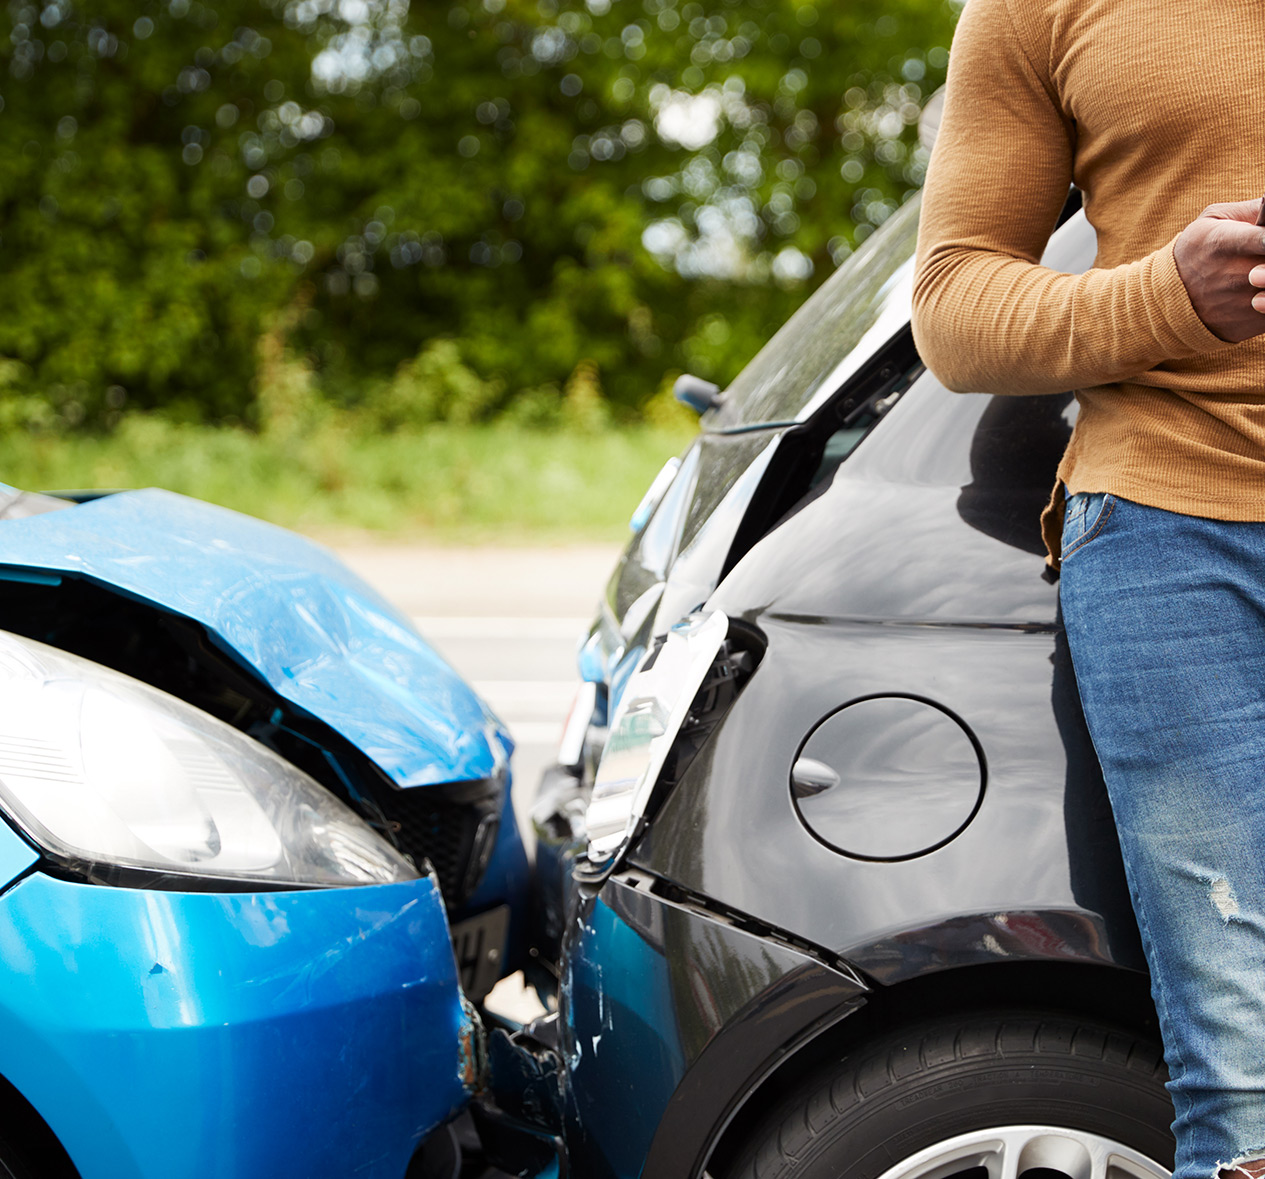 Automobile Accident Benefits